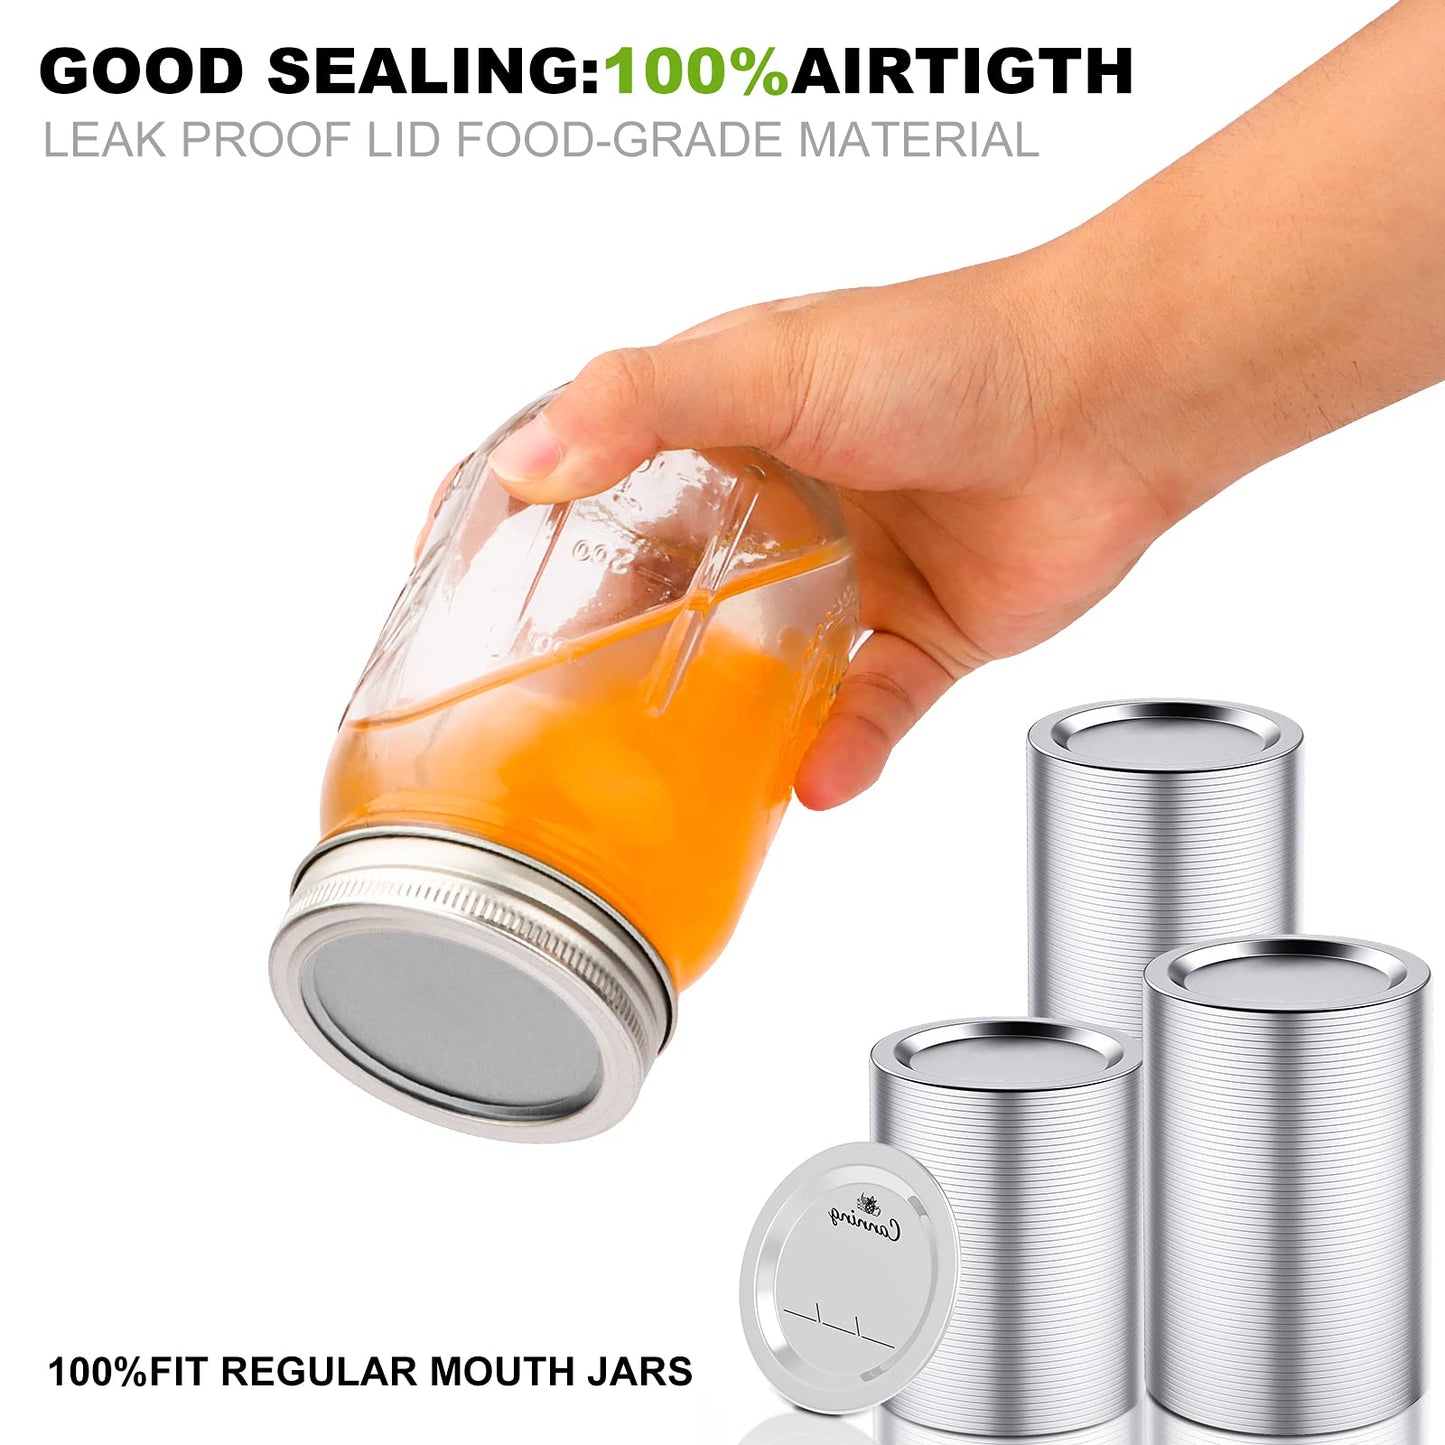 200pcs Regular Mouth Canning Lids, 70mm Mason Jar Lids for Canning, Reusable Leak Proof Split-type Gold Lids, Food Grade Material (70mm, Silver)